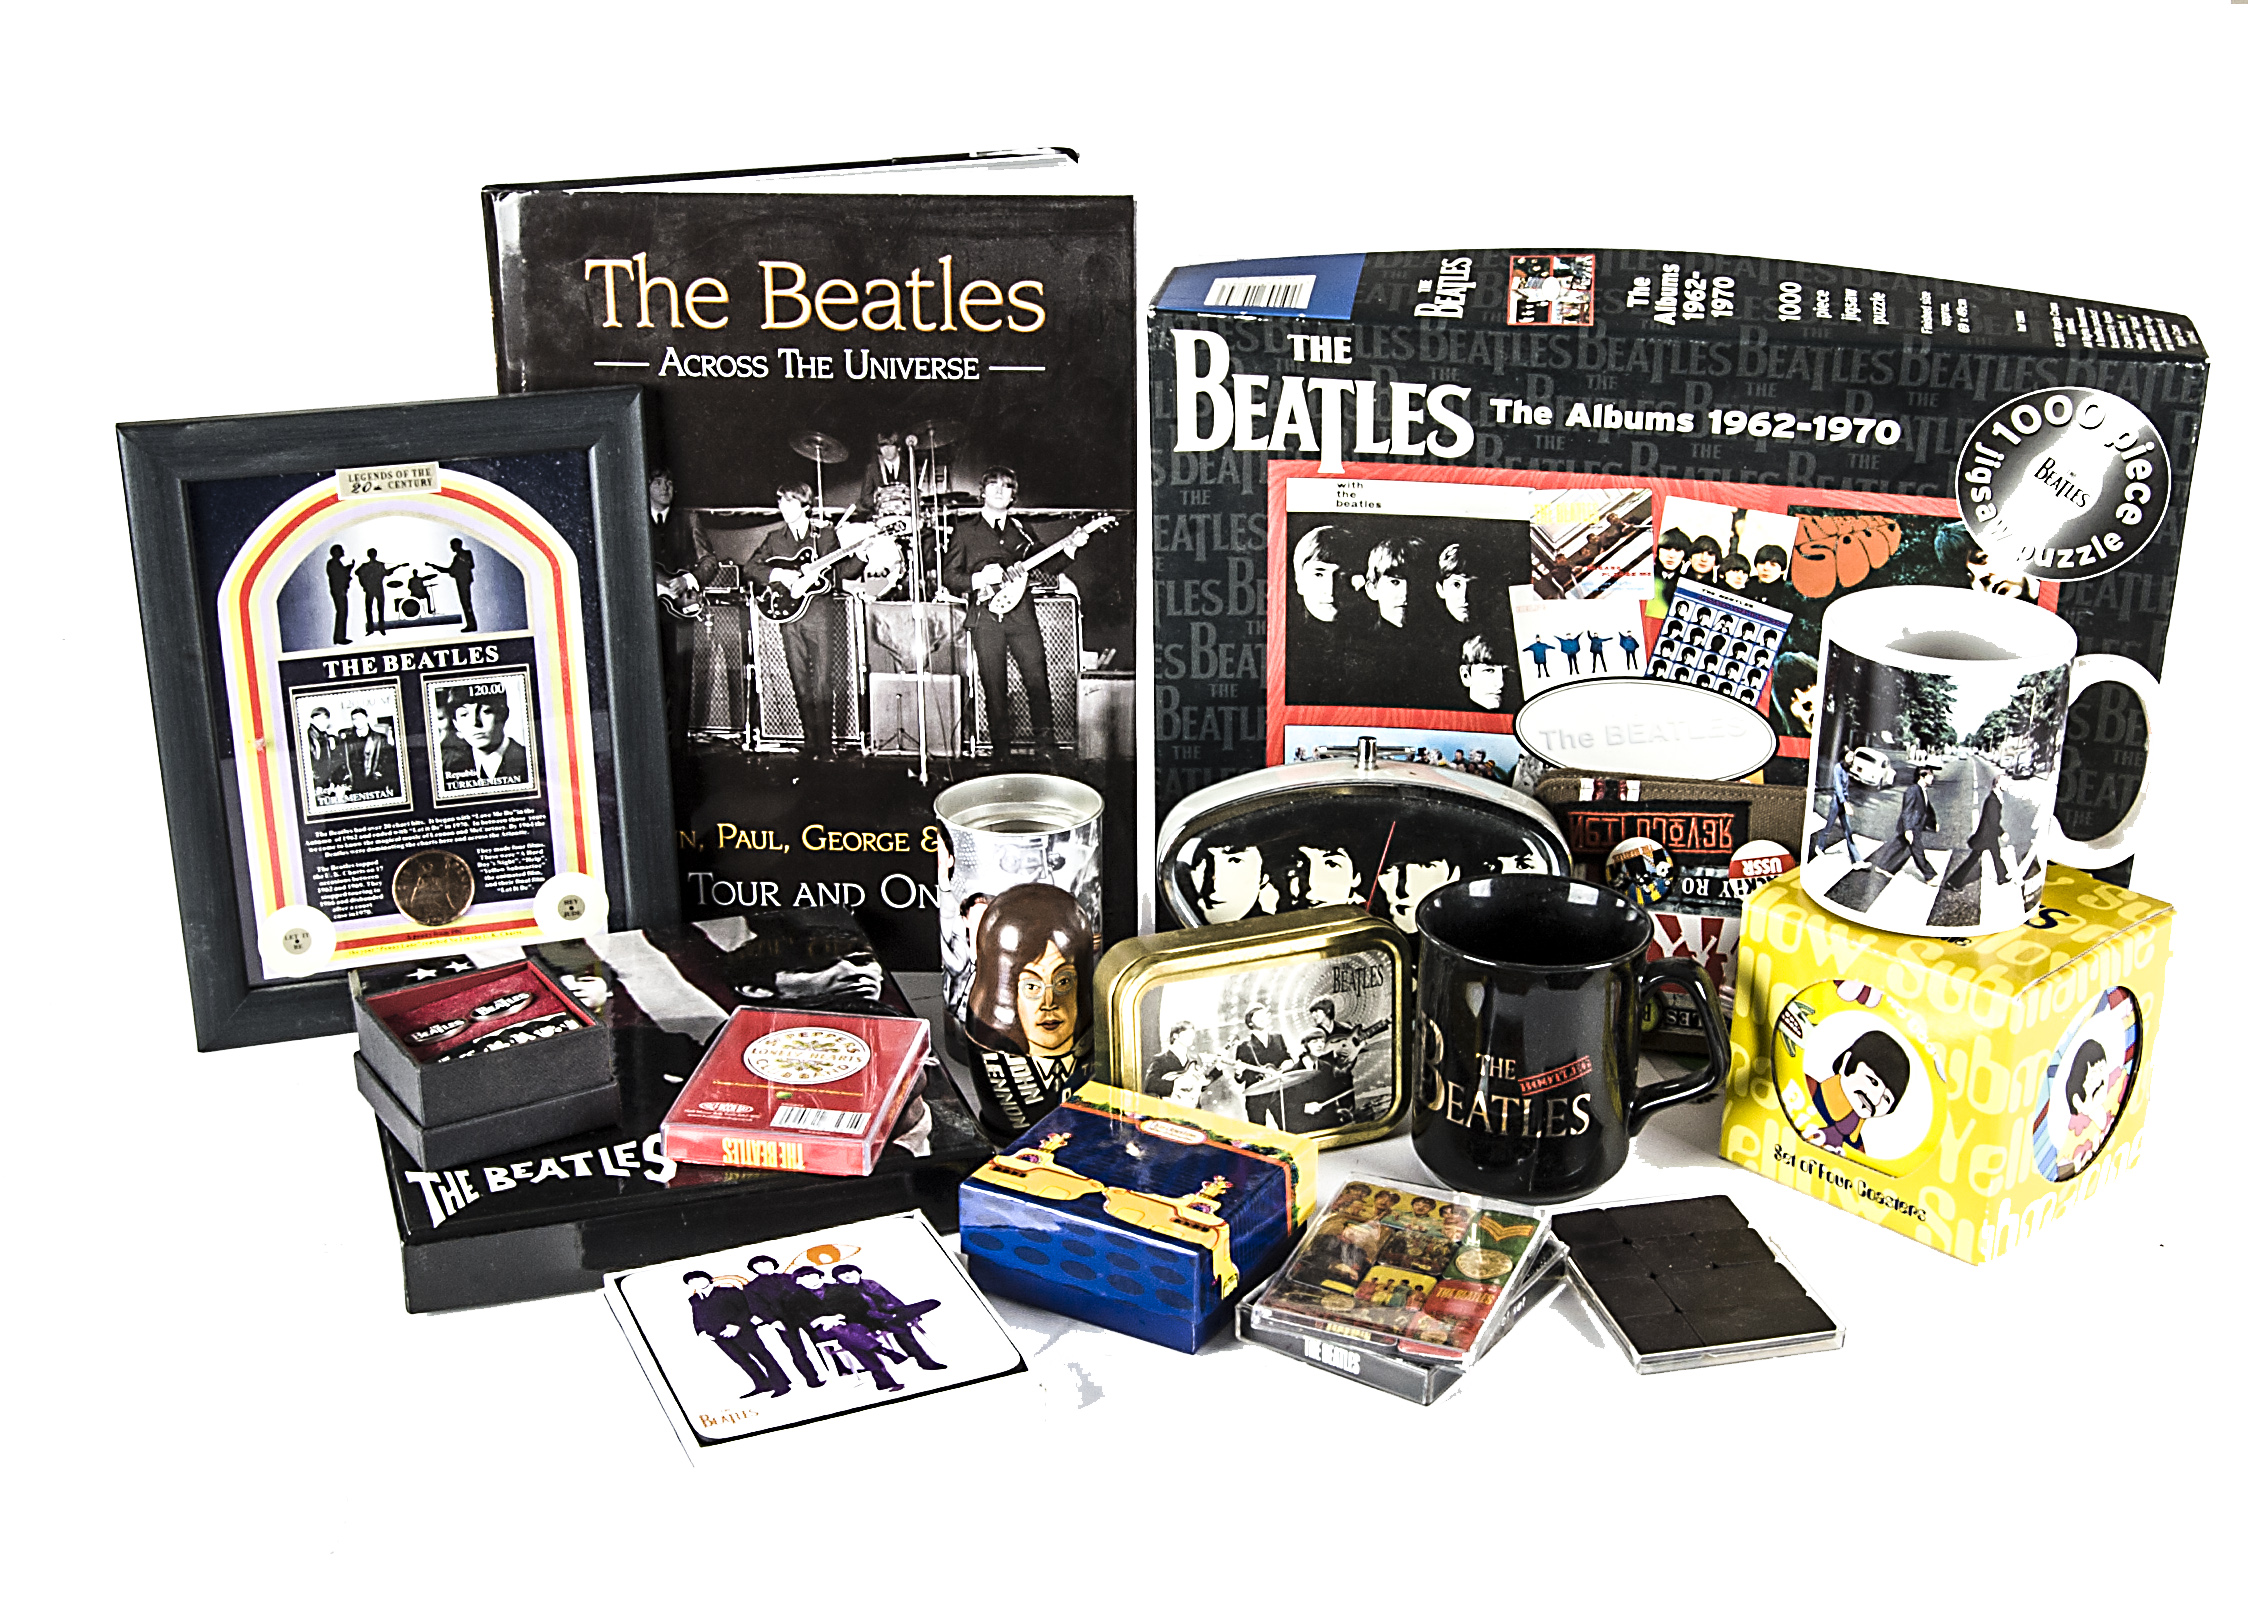 The Beatles, approximately twenty five items of Beatles memorabilia that includes Yellow Submarine -